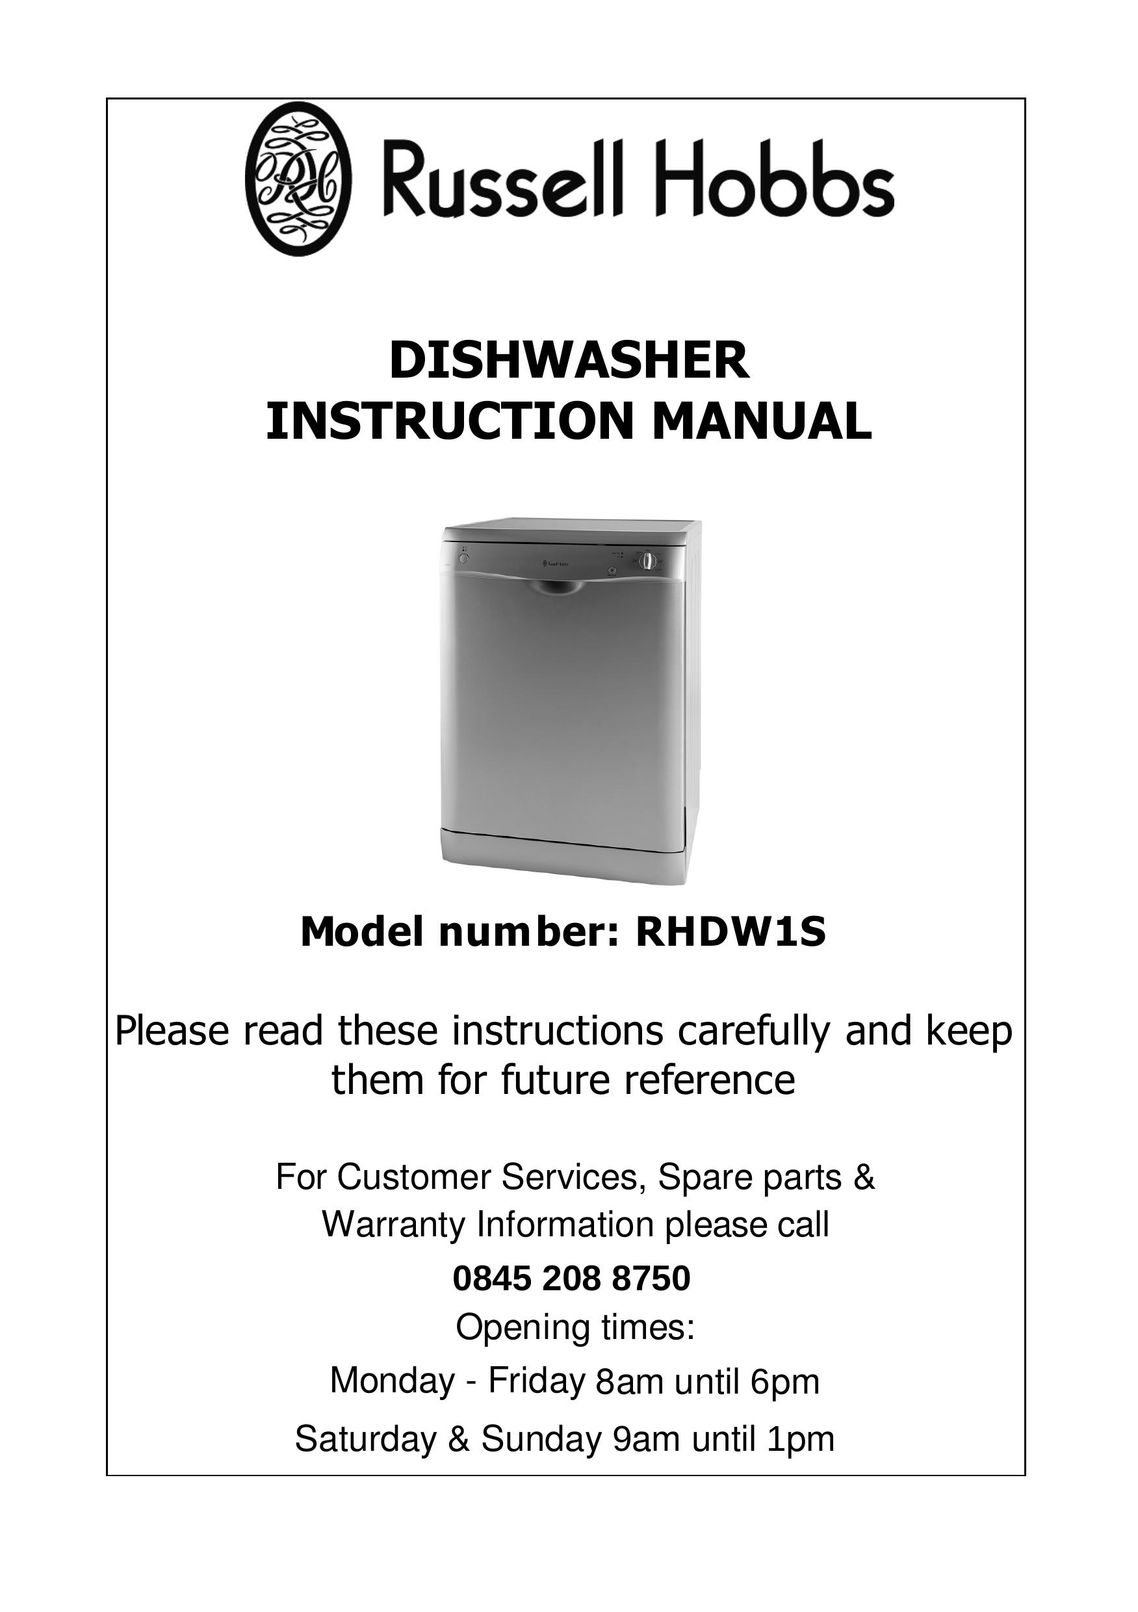 Russell Hobbs RHDW1S Dishwasher User Manual